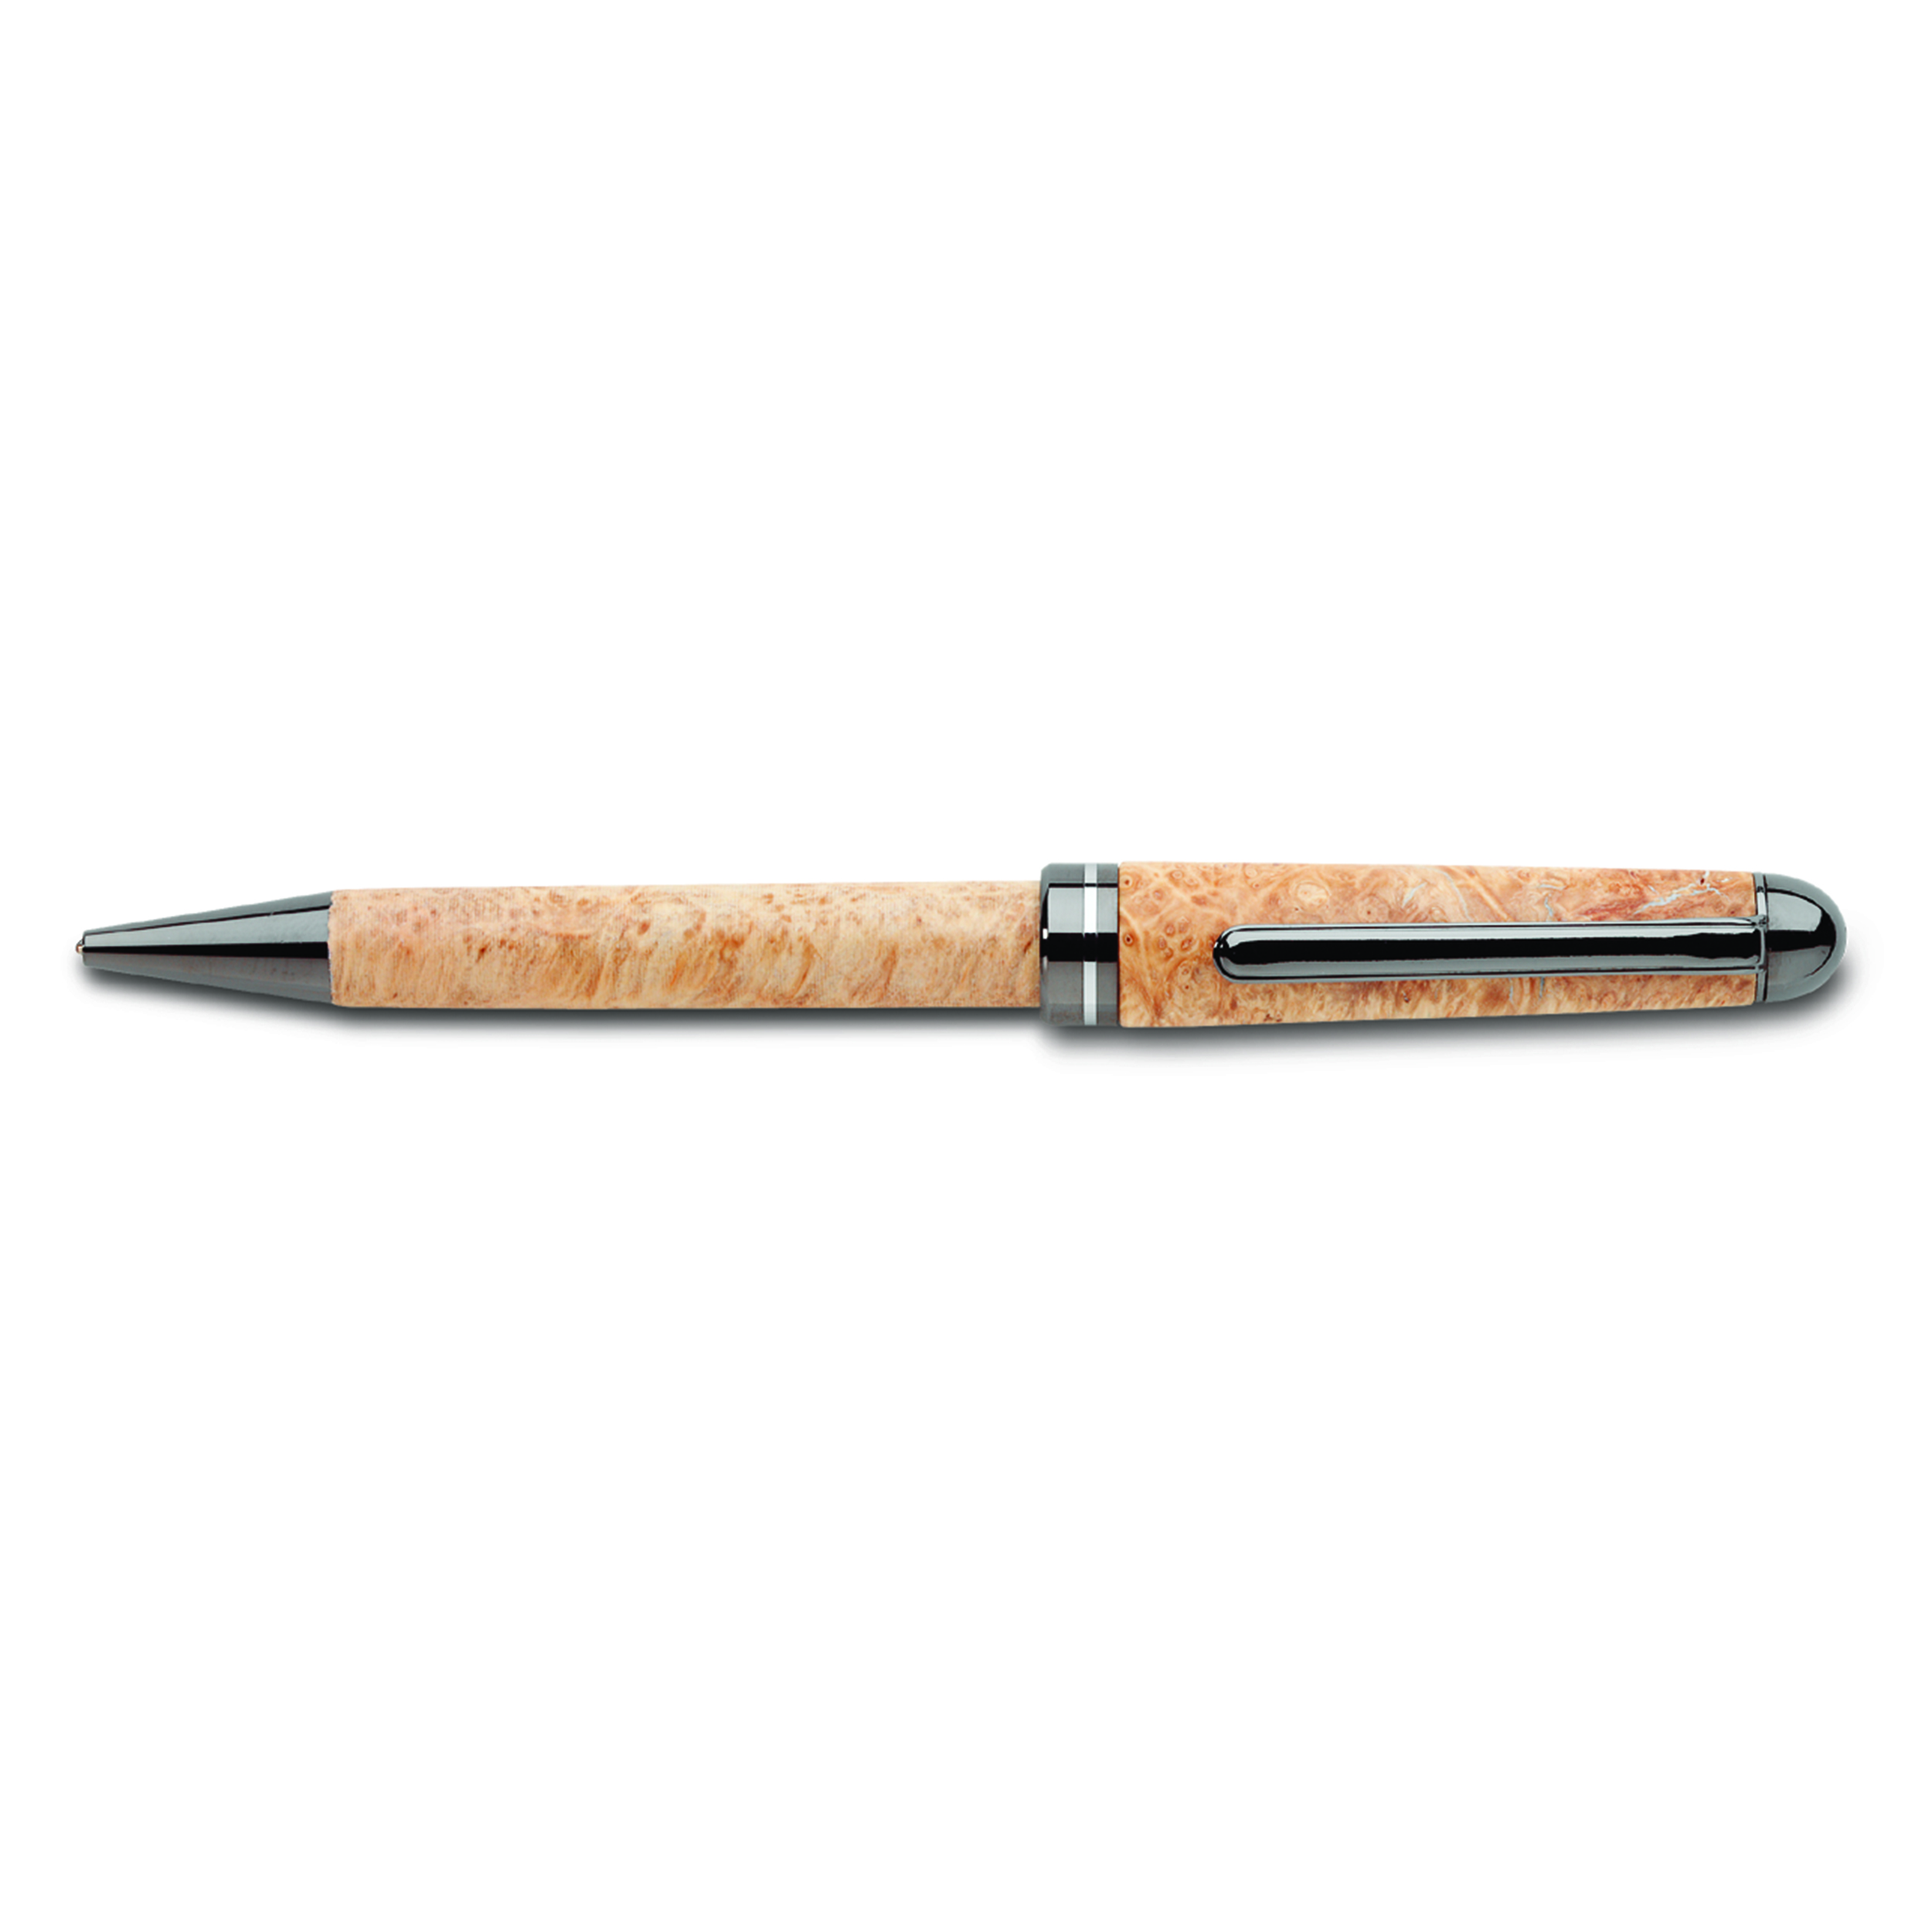 European Style Ballpoint Pen Kit - Black Titanium